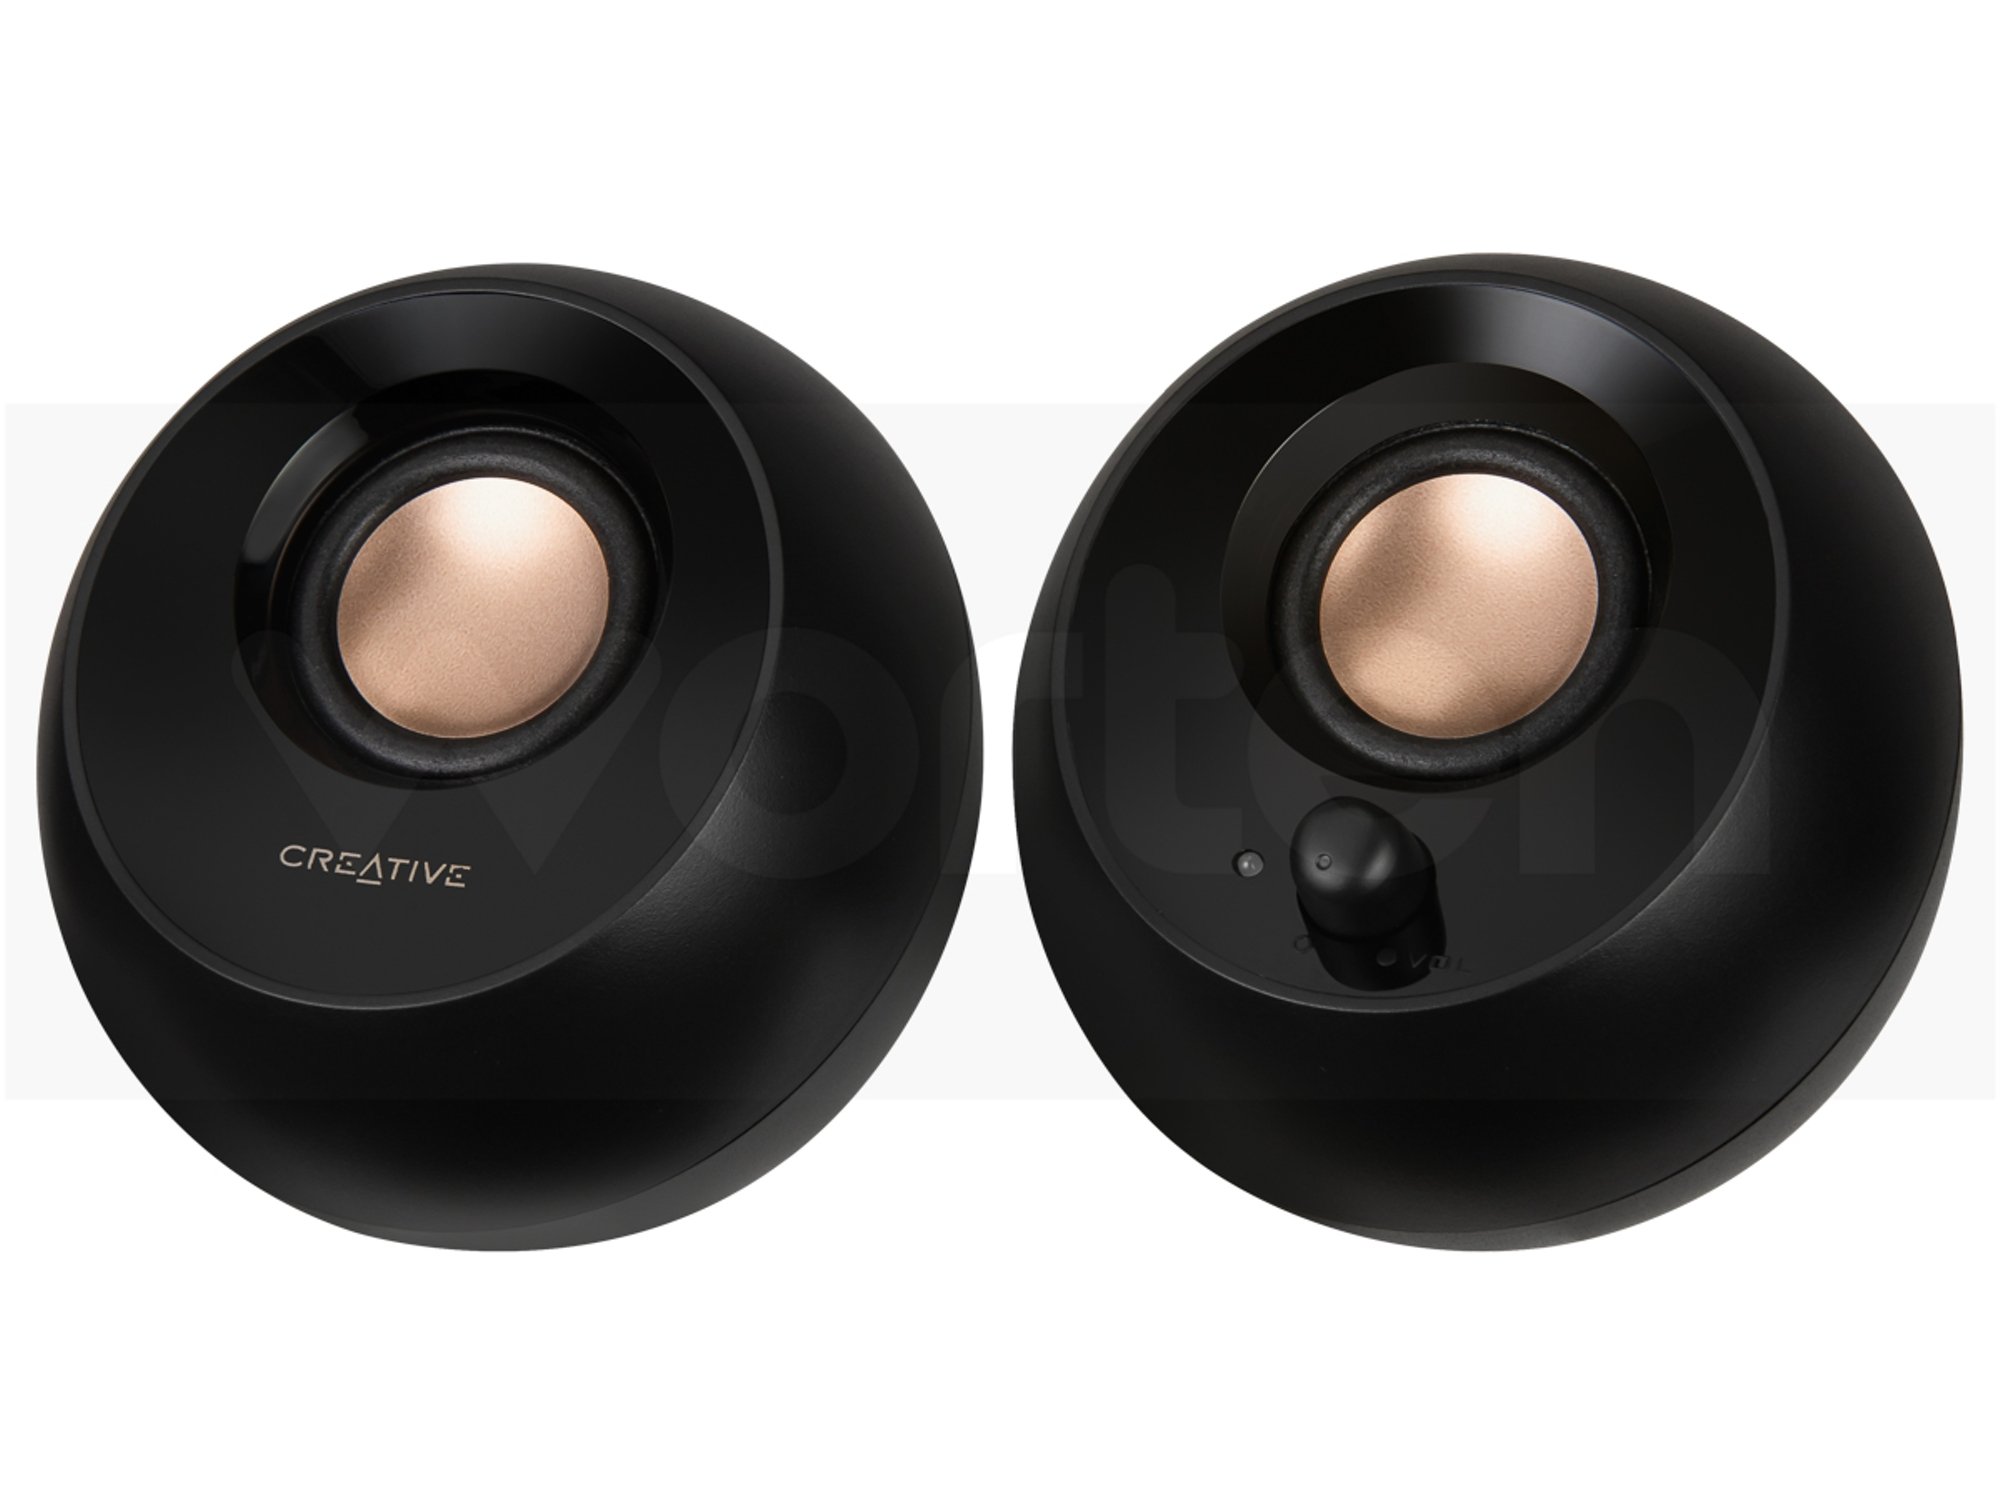 Creative Pebble 2.0 negro usb desktop speakers altavoces altavoz peblble labs pc 4.4 w control volumen para 86 db diseño minimalista 4.4w 35 44 100 17000